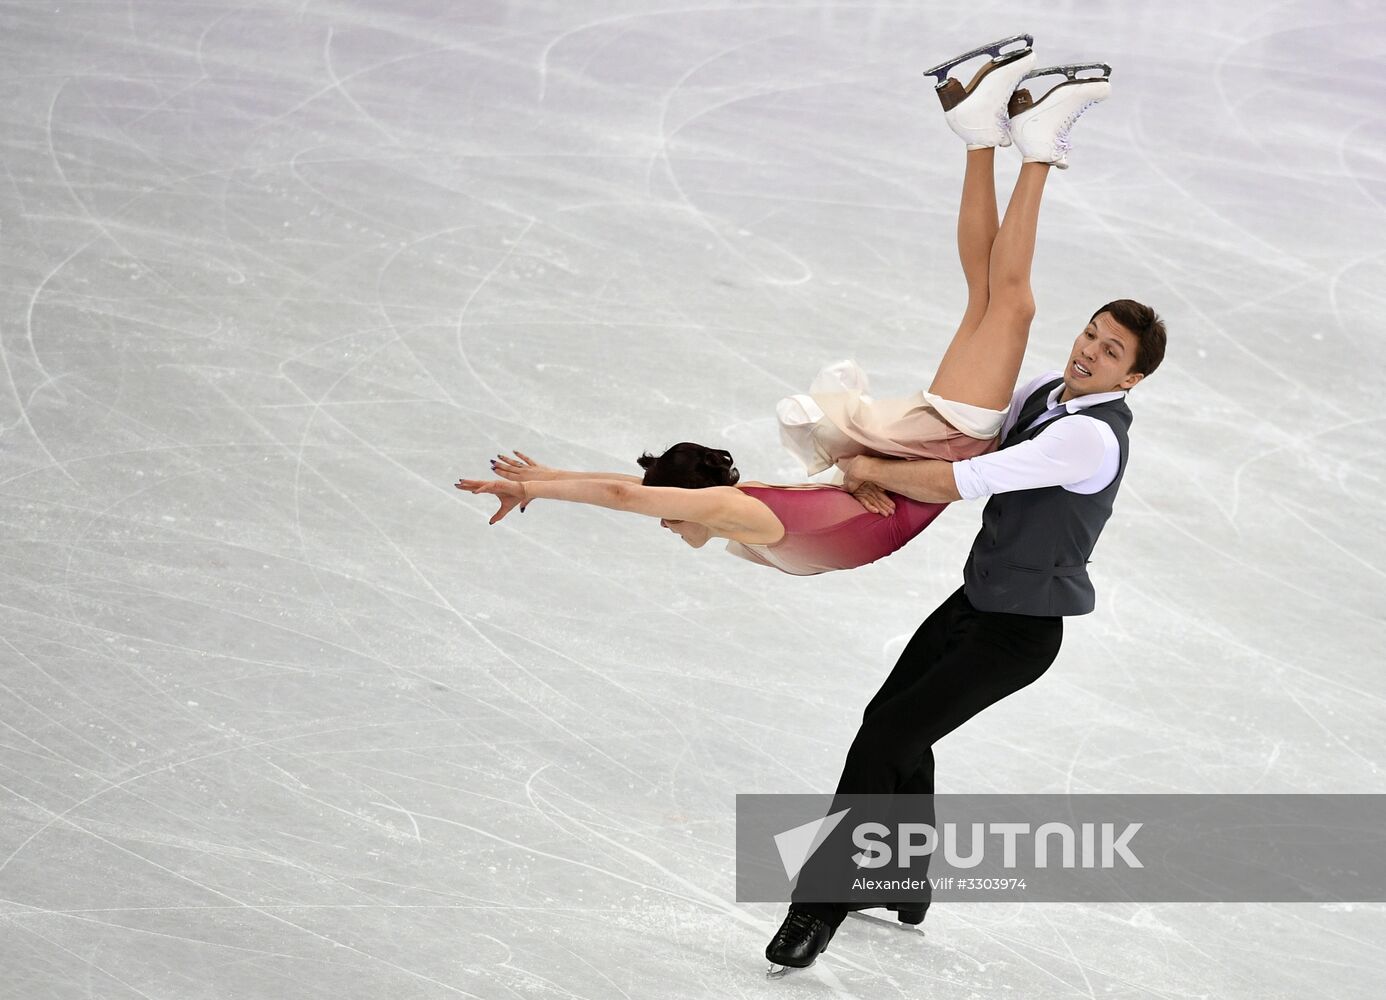 2018 Winter Olympics. Figure skating. Ice dance. Free skating